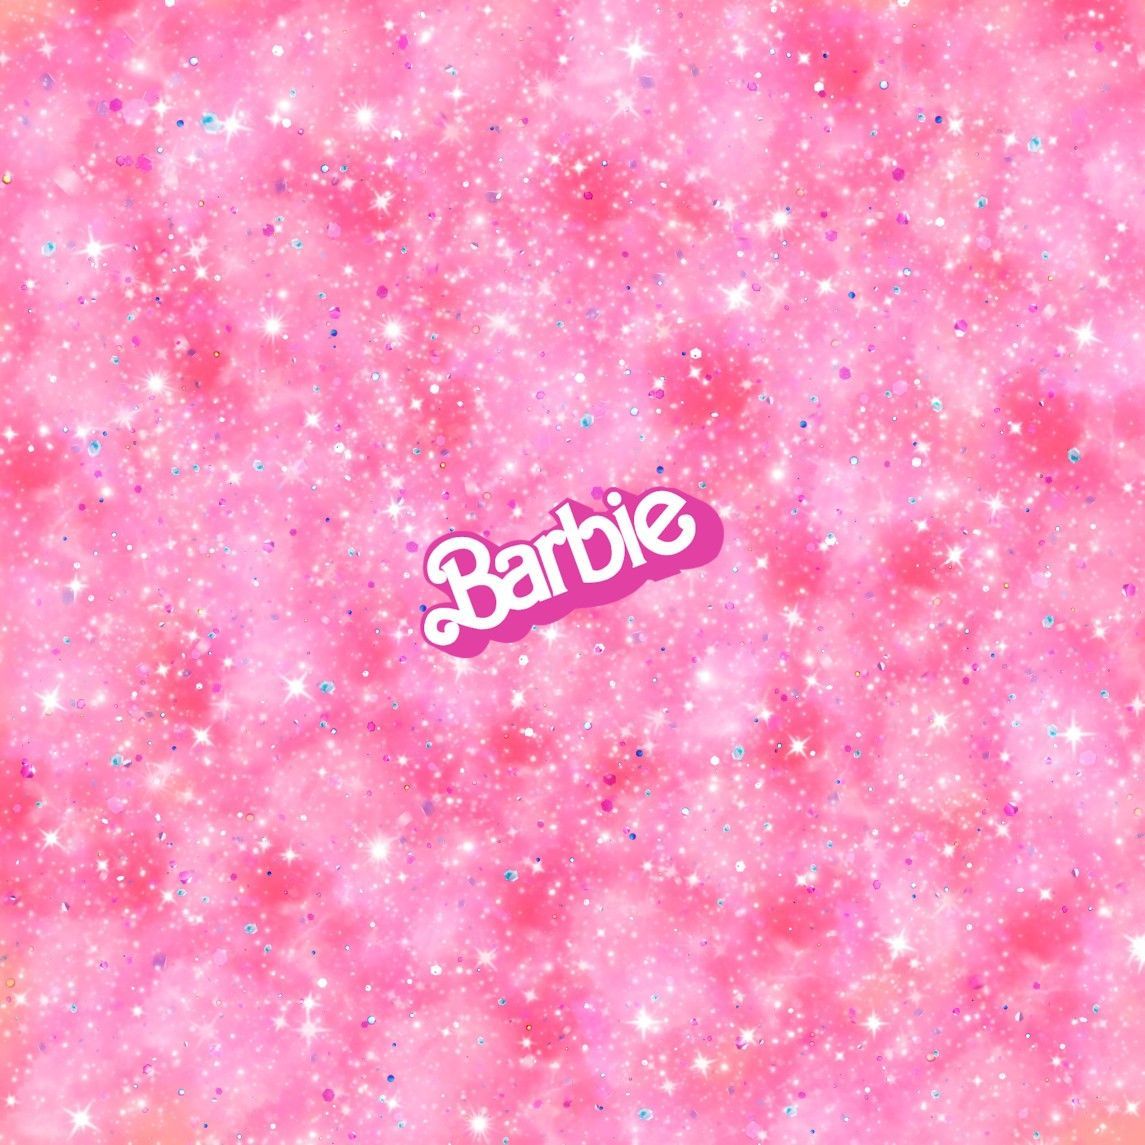 Glitter Barbie Wallpaper, HD Glitter Barbie Background on WallpaperBat